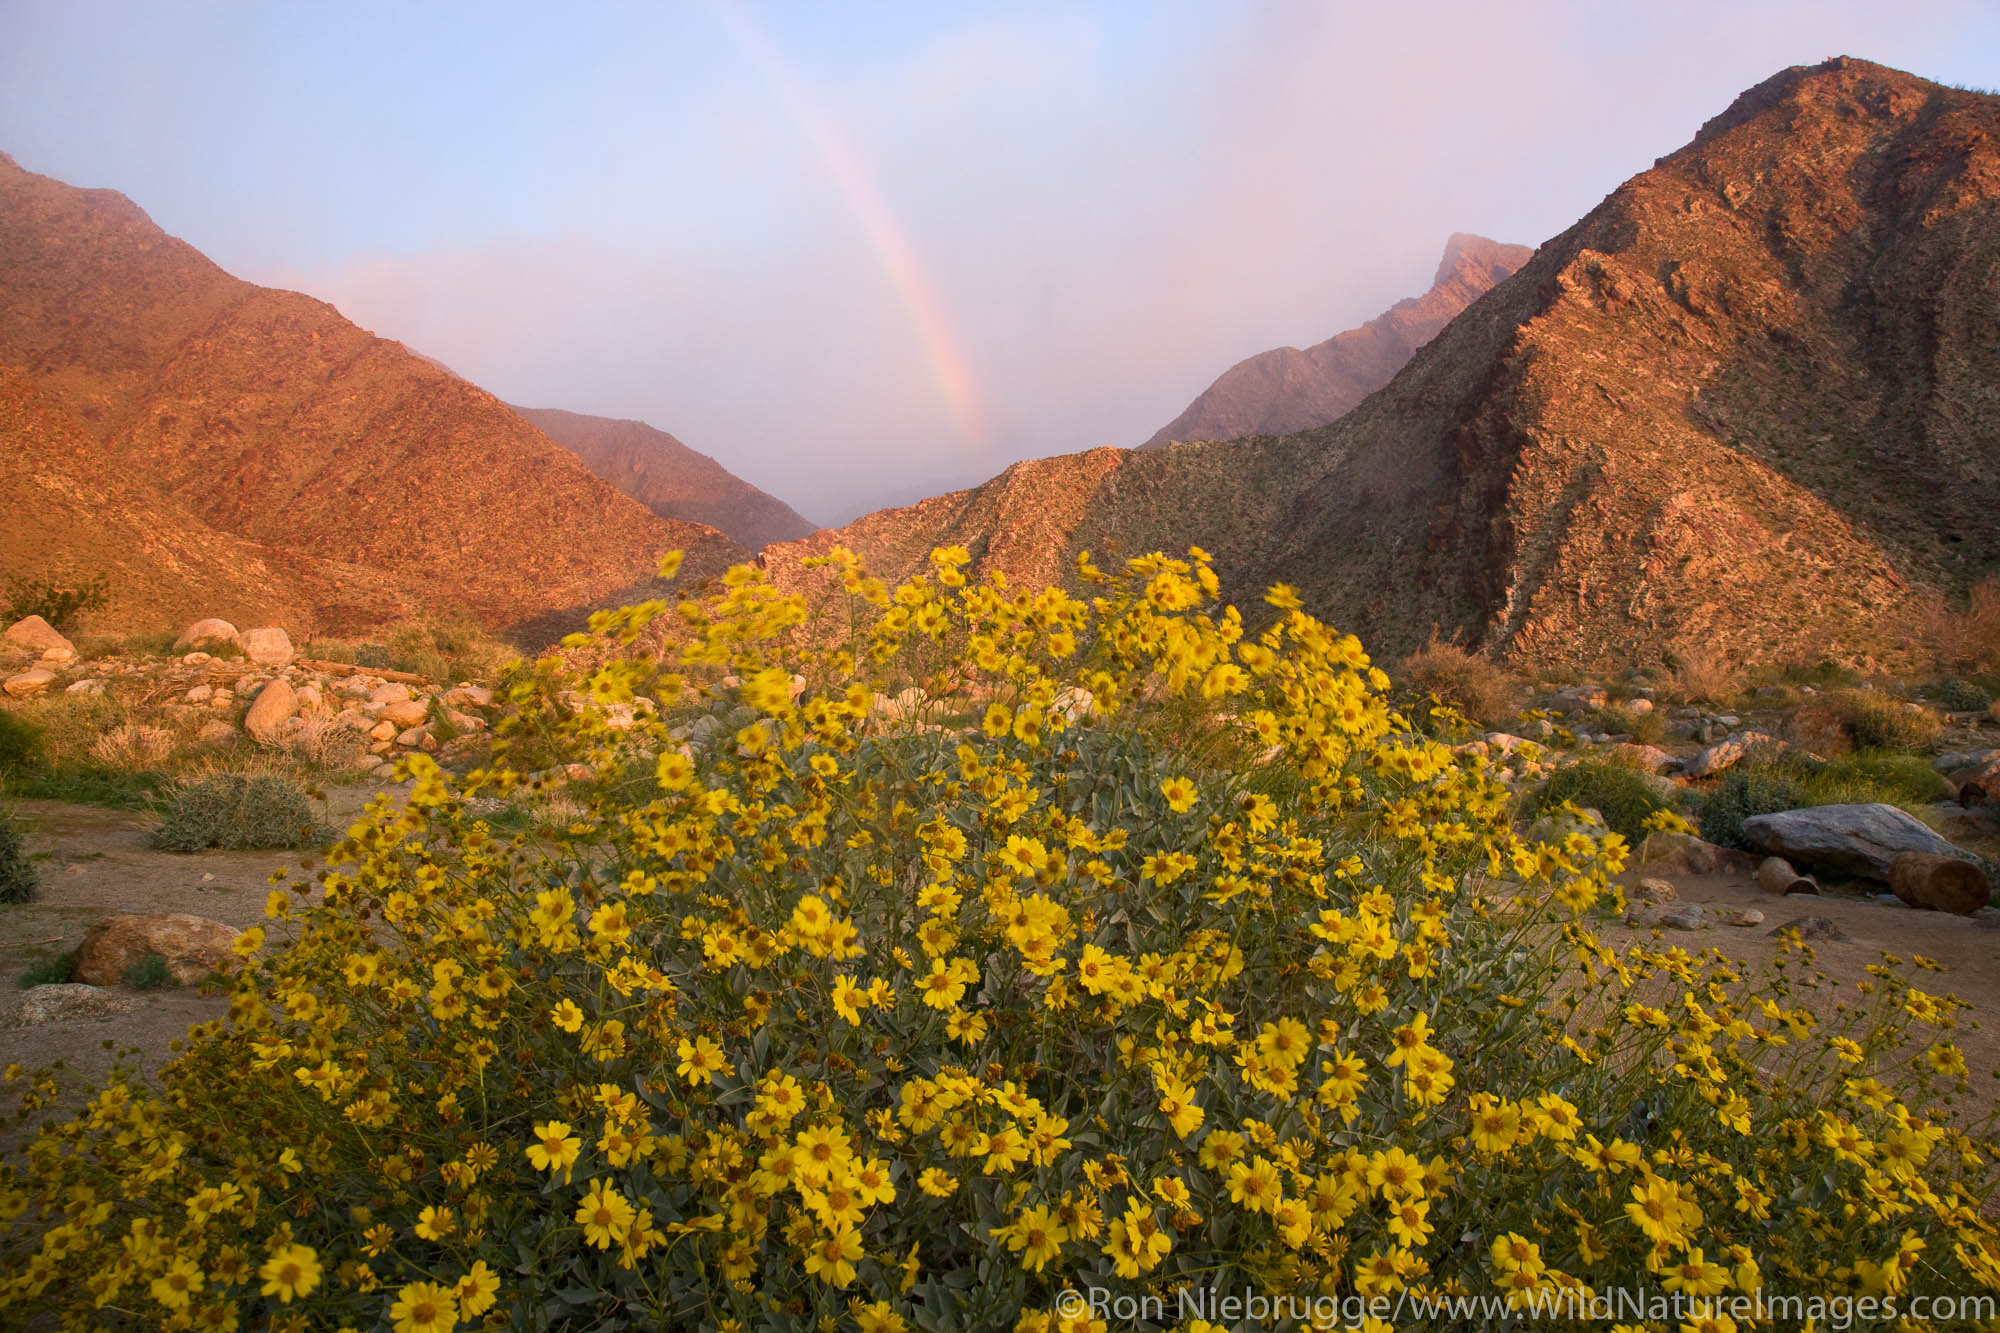 Wildflowers in Borrego Palm Canyon, Anza-Borrego Desert State Park, California.